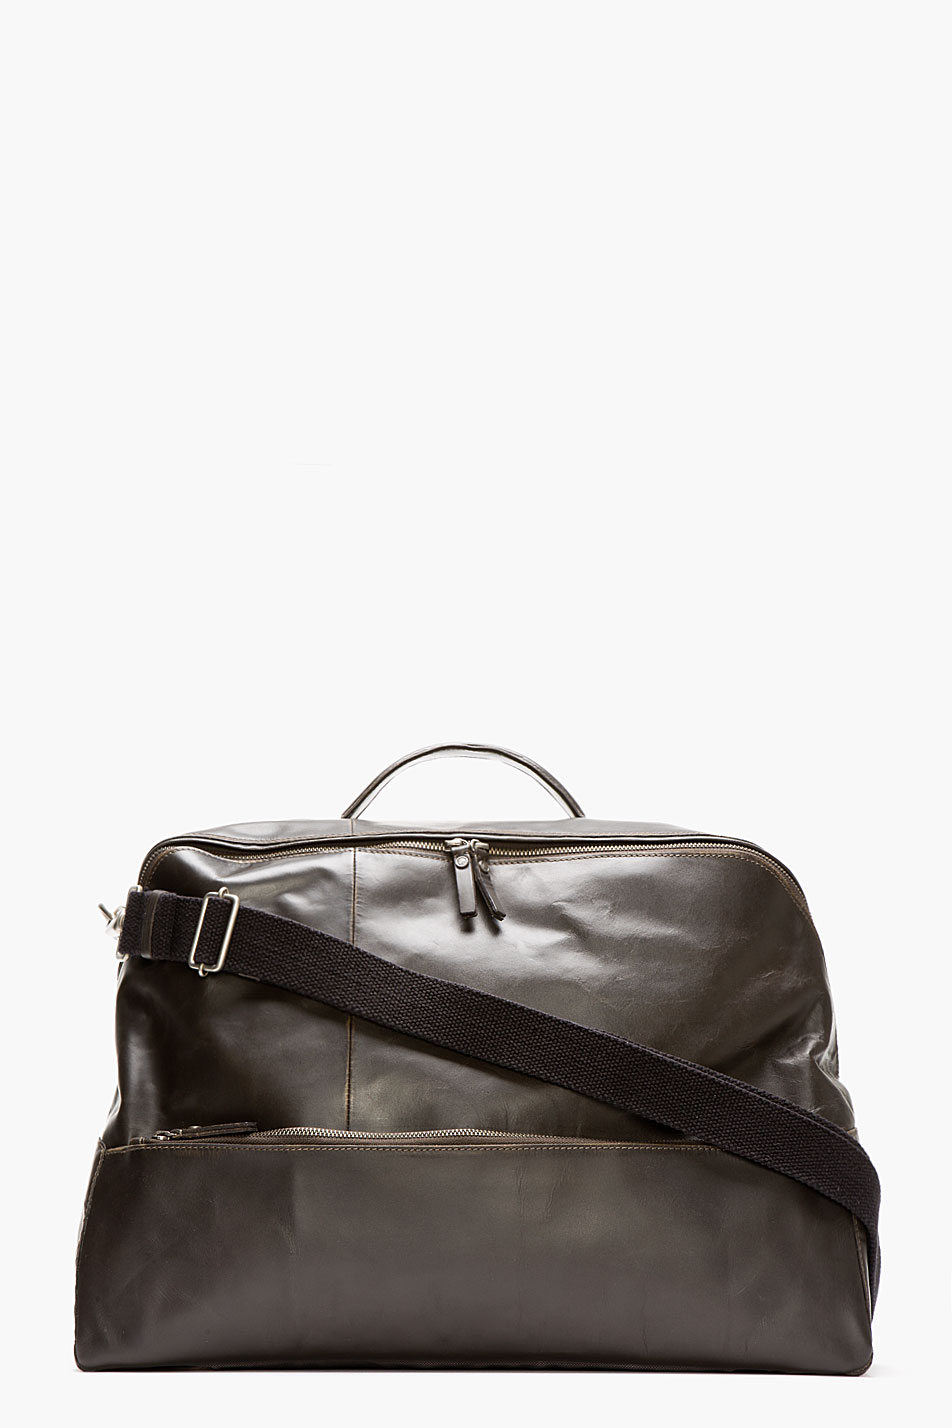 Diesel Dark Brown Leather Licorice Duffle Bag in Brown for Men | Lyst